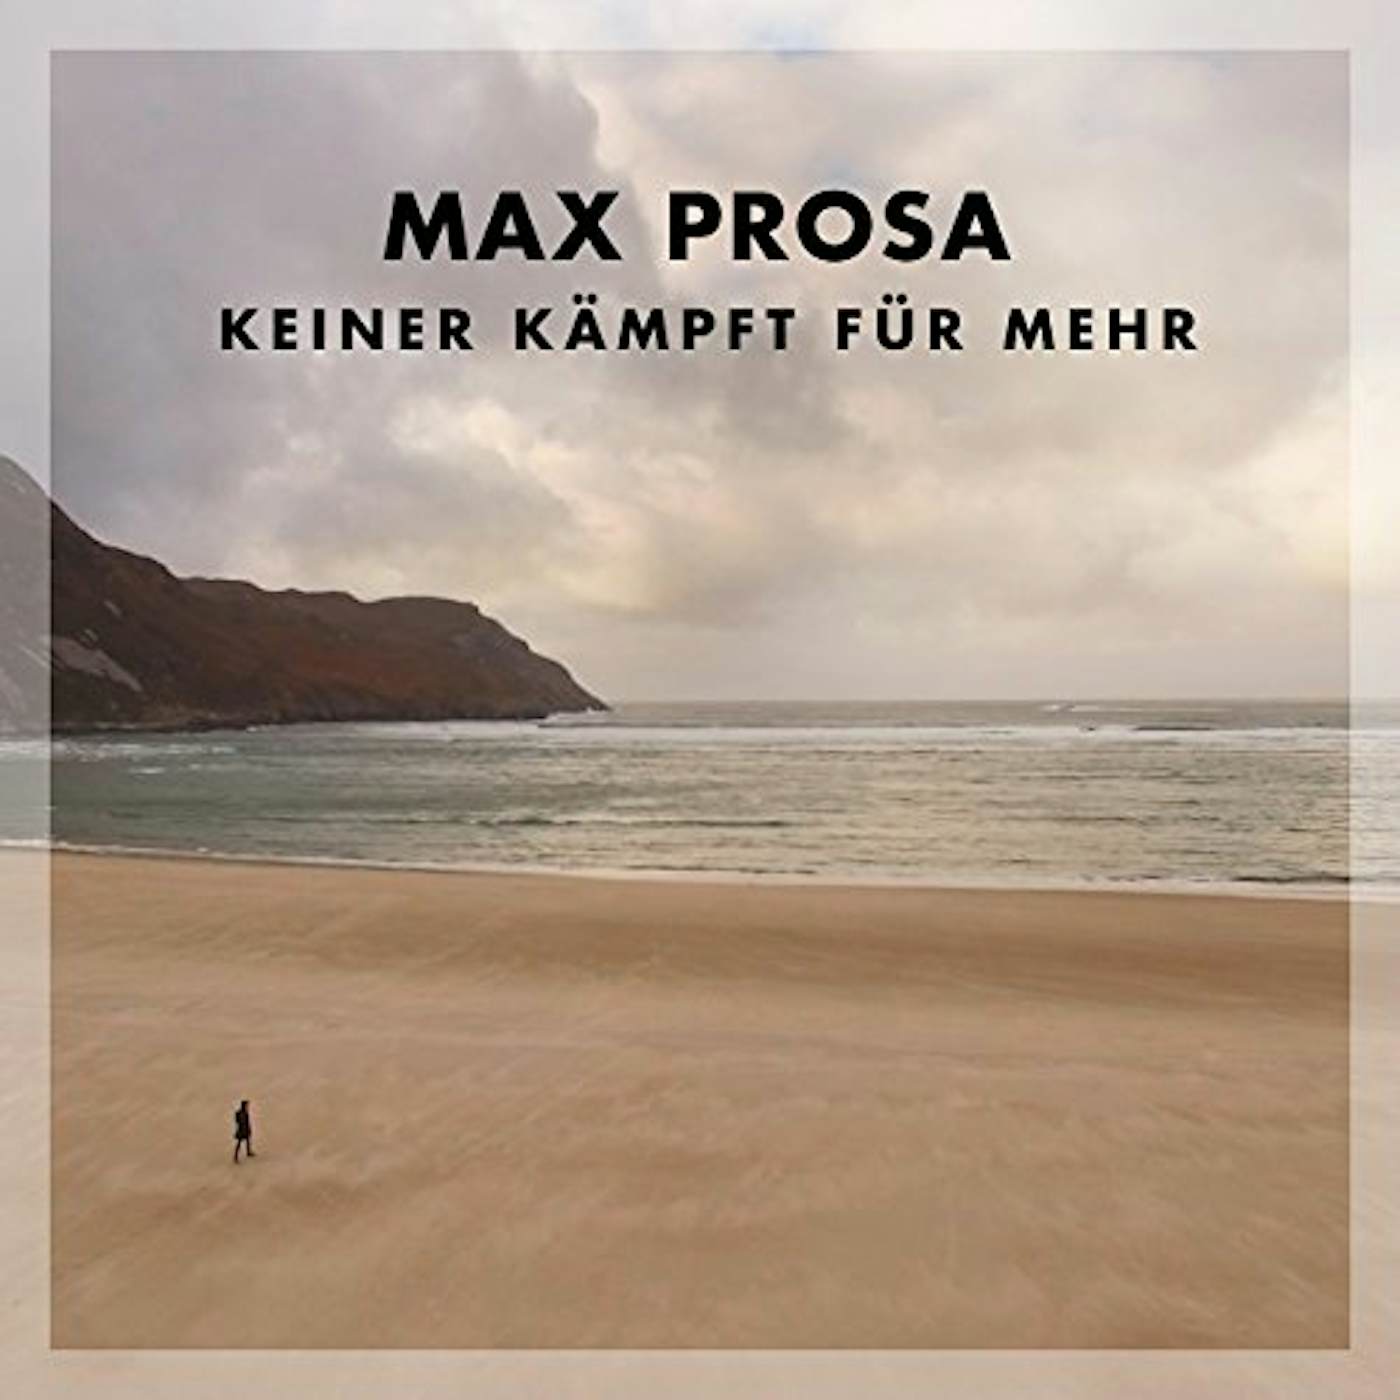 Max Prosa KEINER KAMPFT FUR MEHR CD